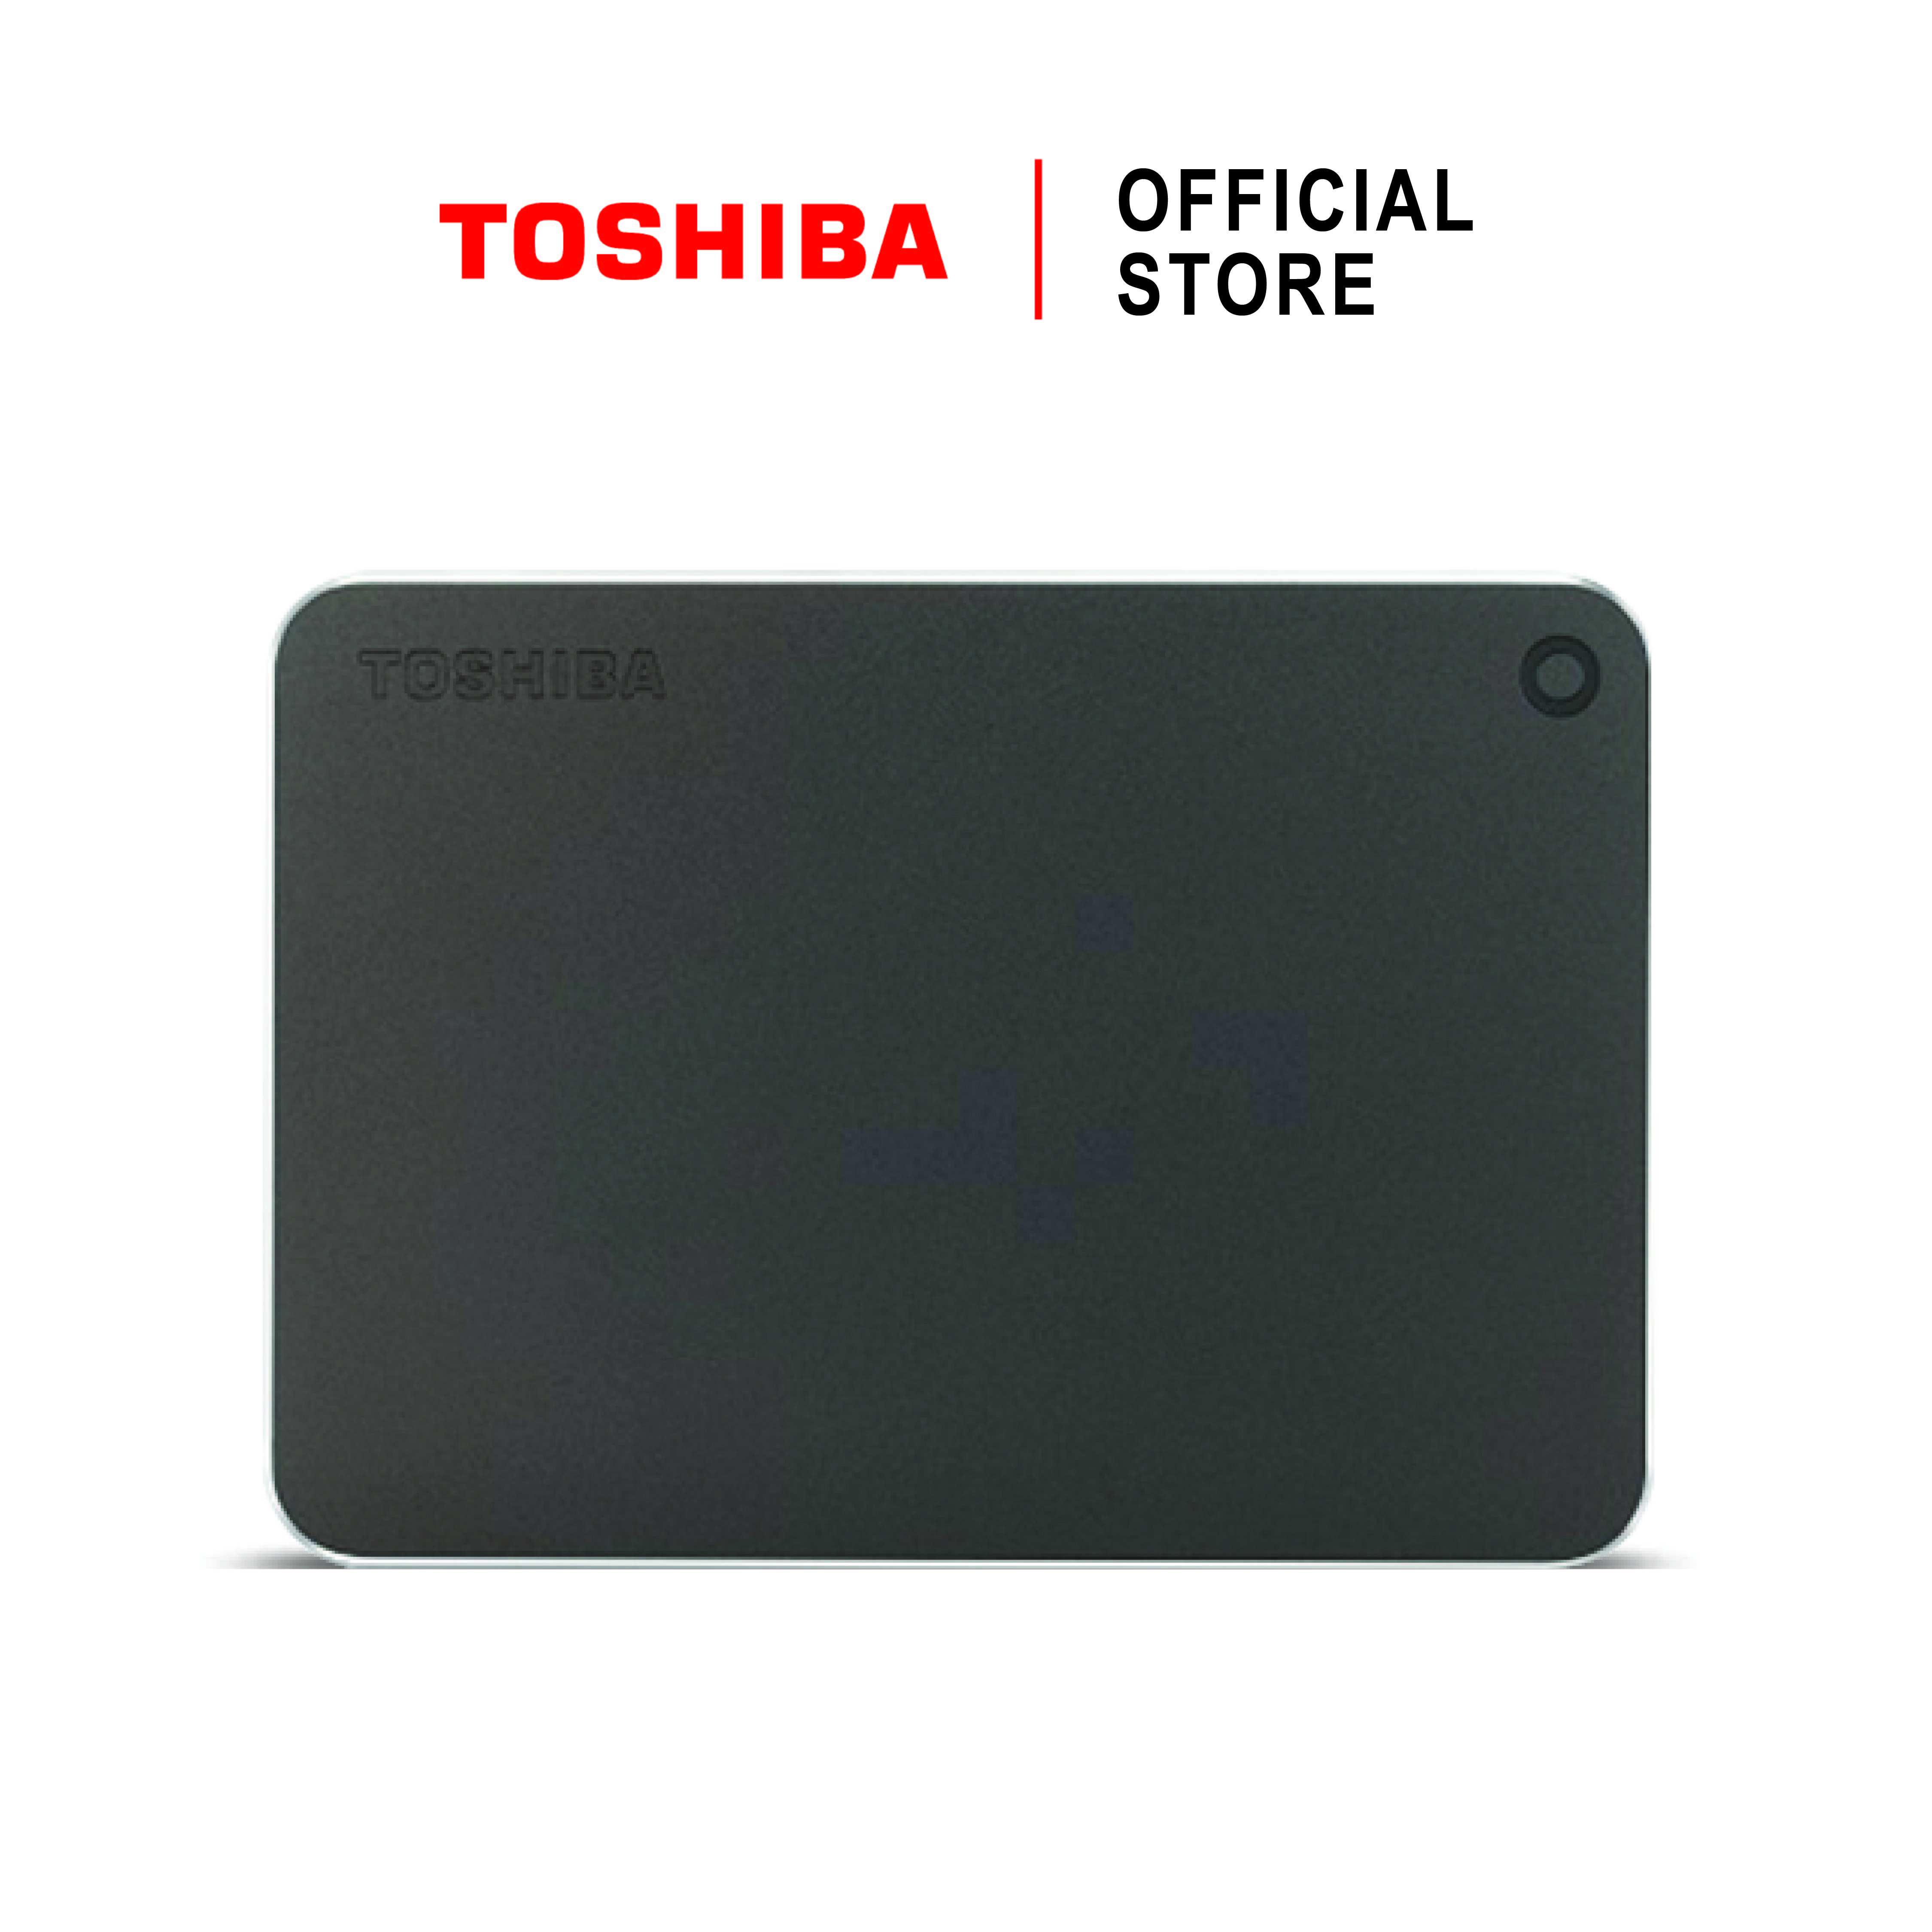 Toshiba External Harddrive (2TB) สีดำ รุ่น Canvio PremiumP2 External HDD 2TB USB3.0 Black